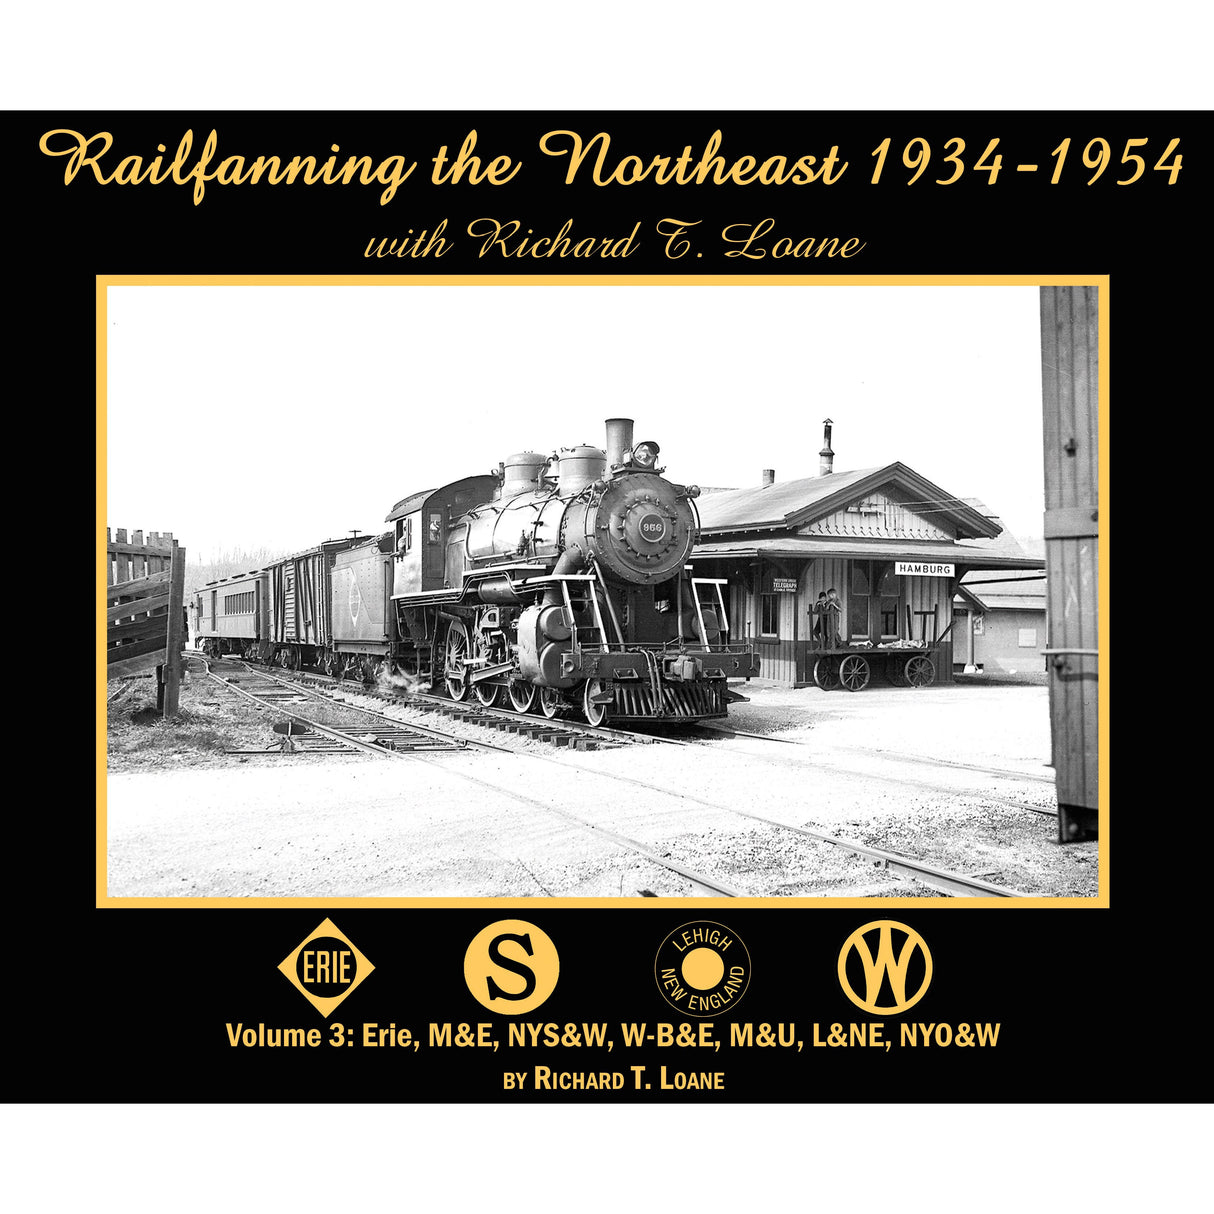 Morning Sun Books Railfanning the Northeast 1934-1954 with Richard T. Loane Volume 3: Erie, M&E, NYS&W, W-B&E, M&U, L&NE, NYO&W (Softcover)